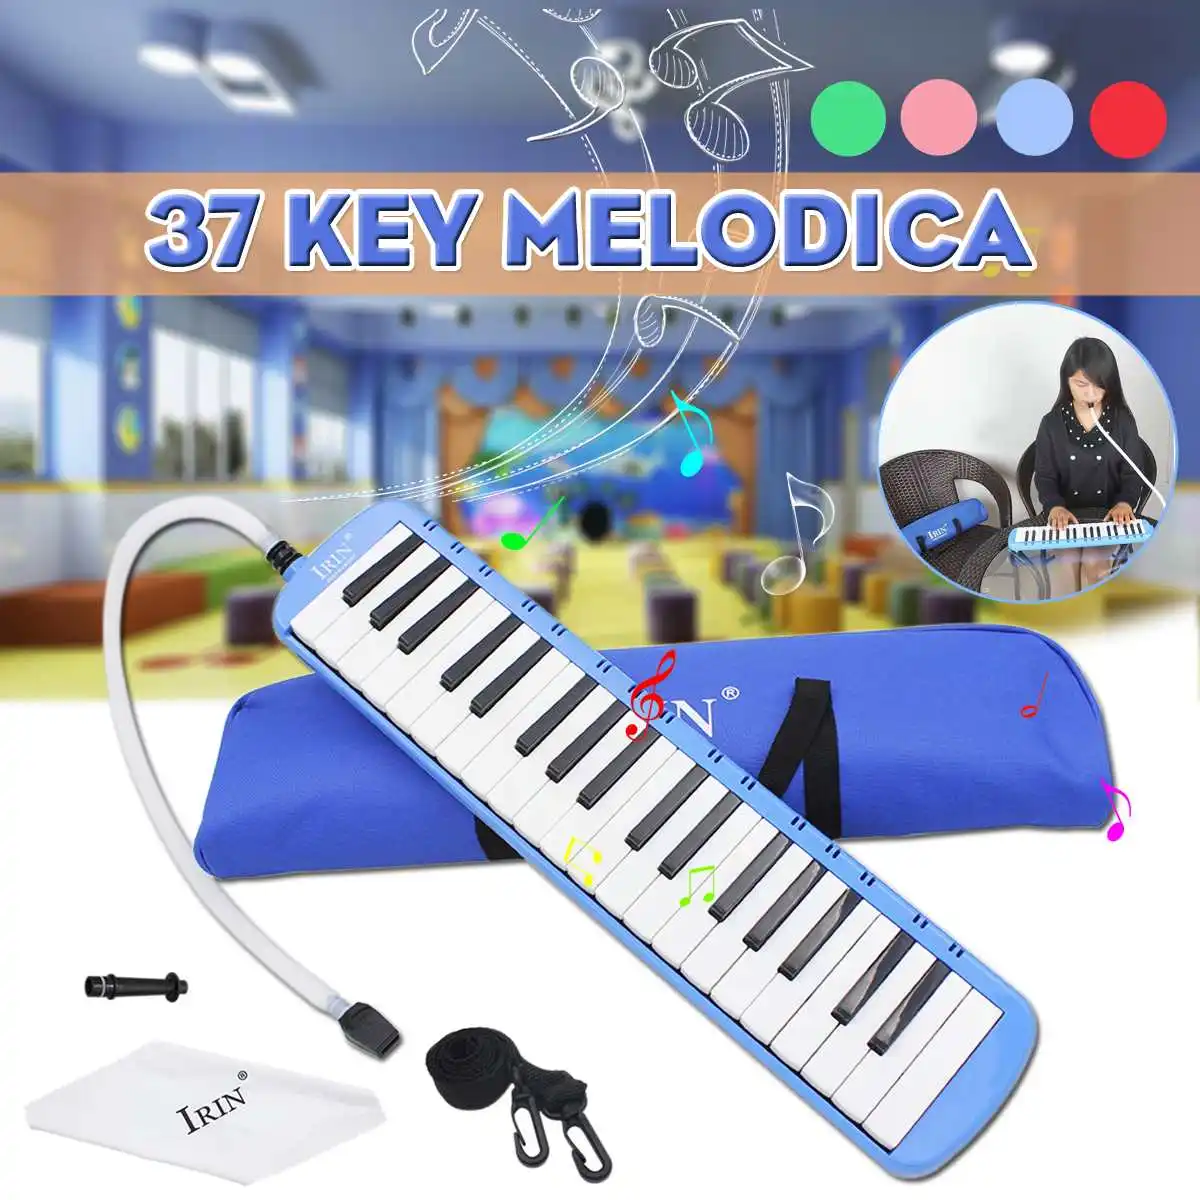 32 Keys Electronic Melodica Harmonica Keyboard With Handbag ...